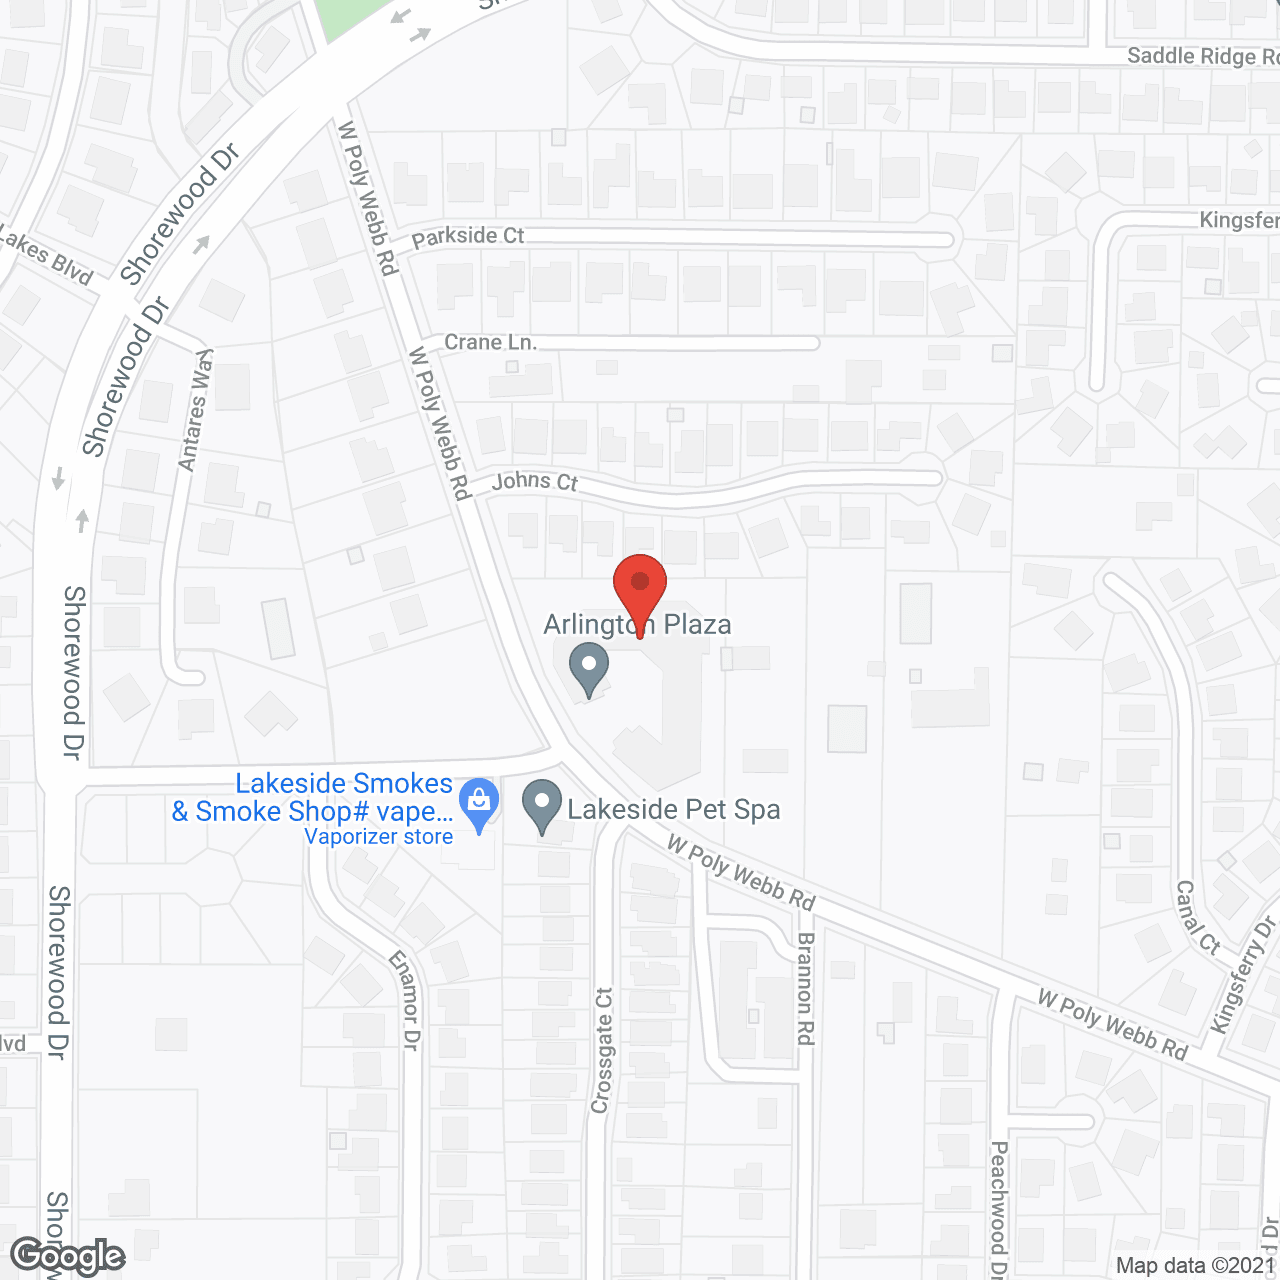 Arlington Plaza in google map